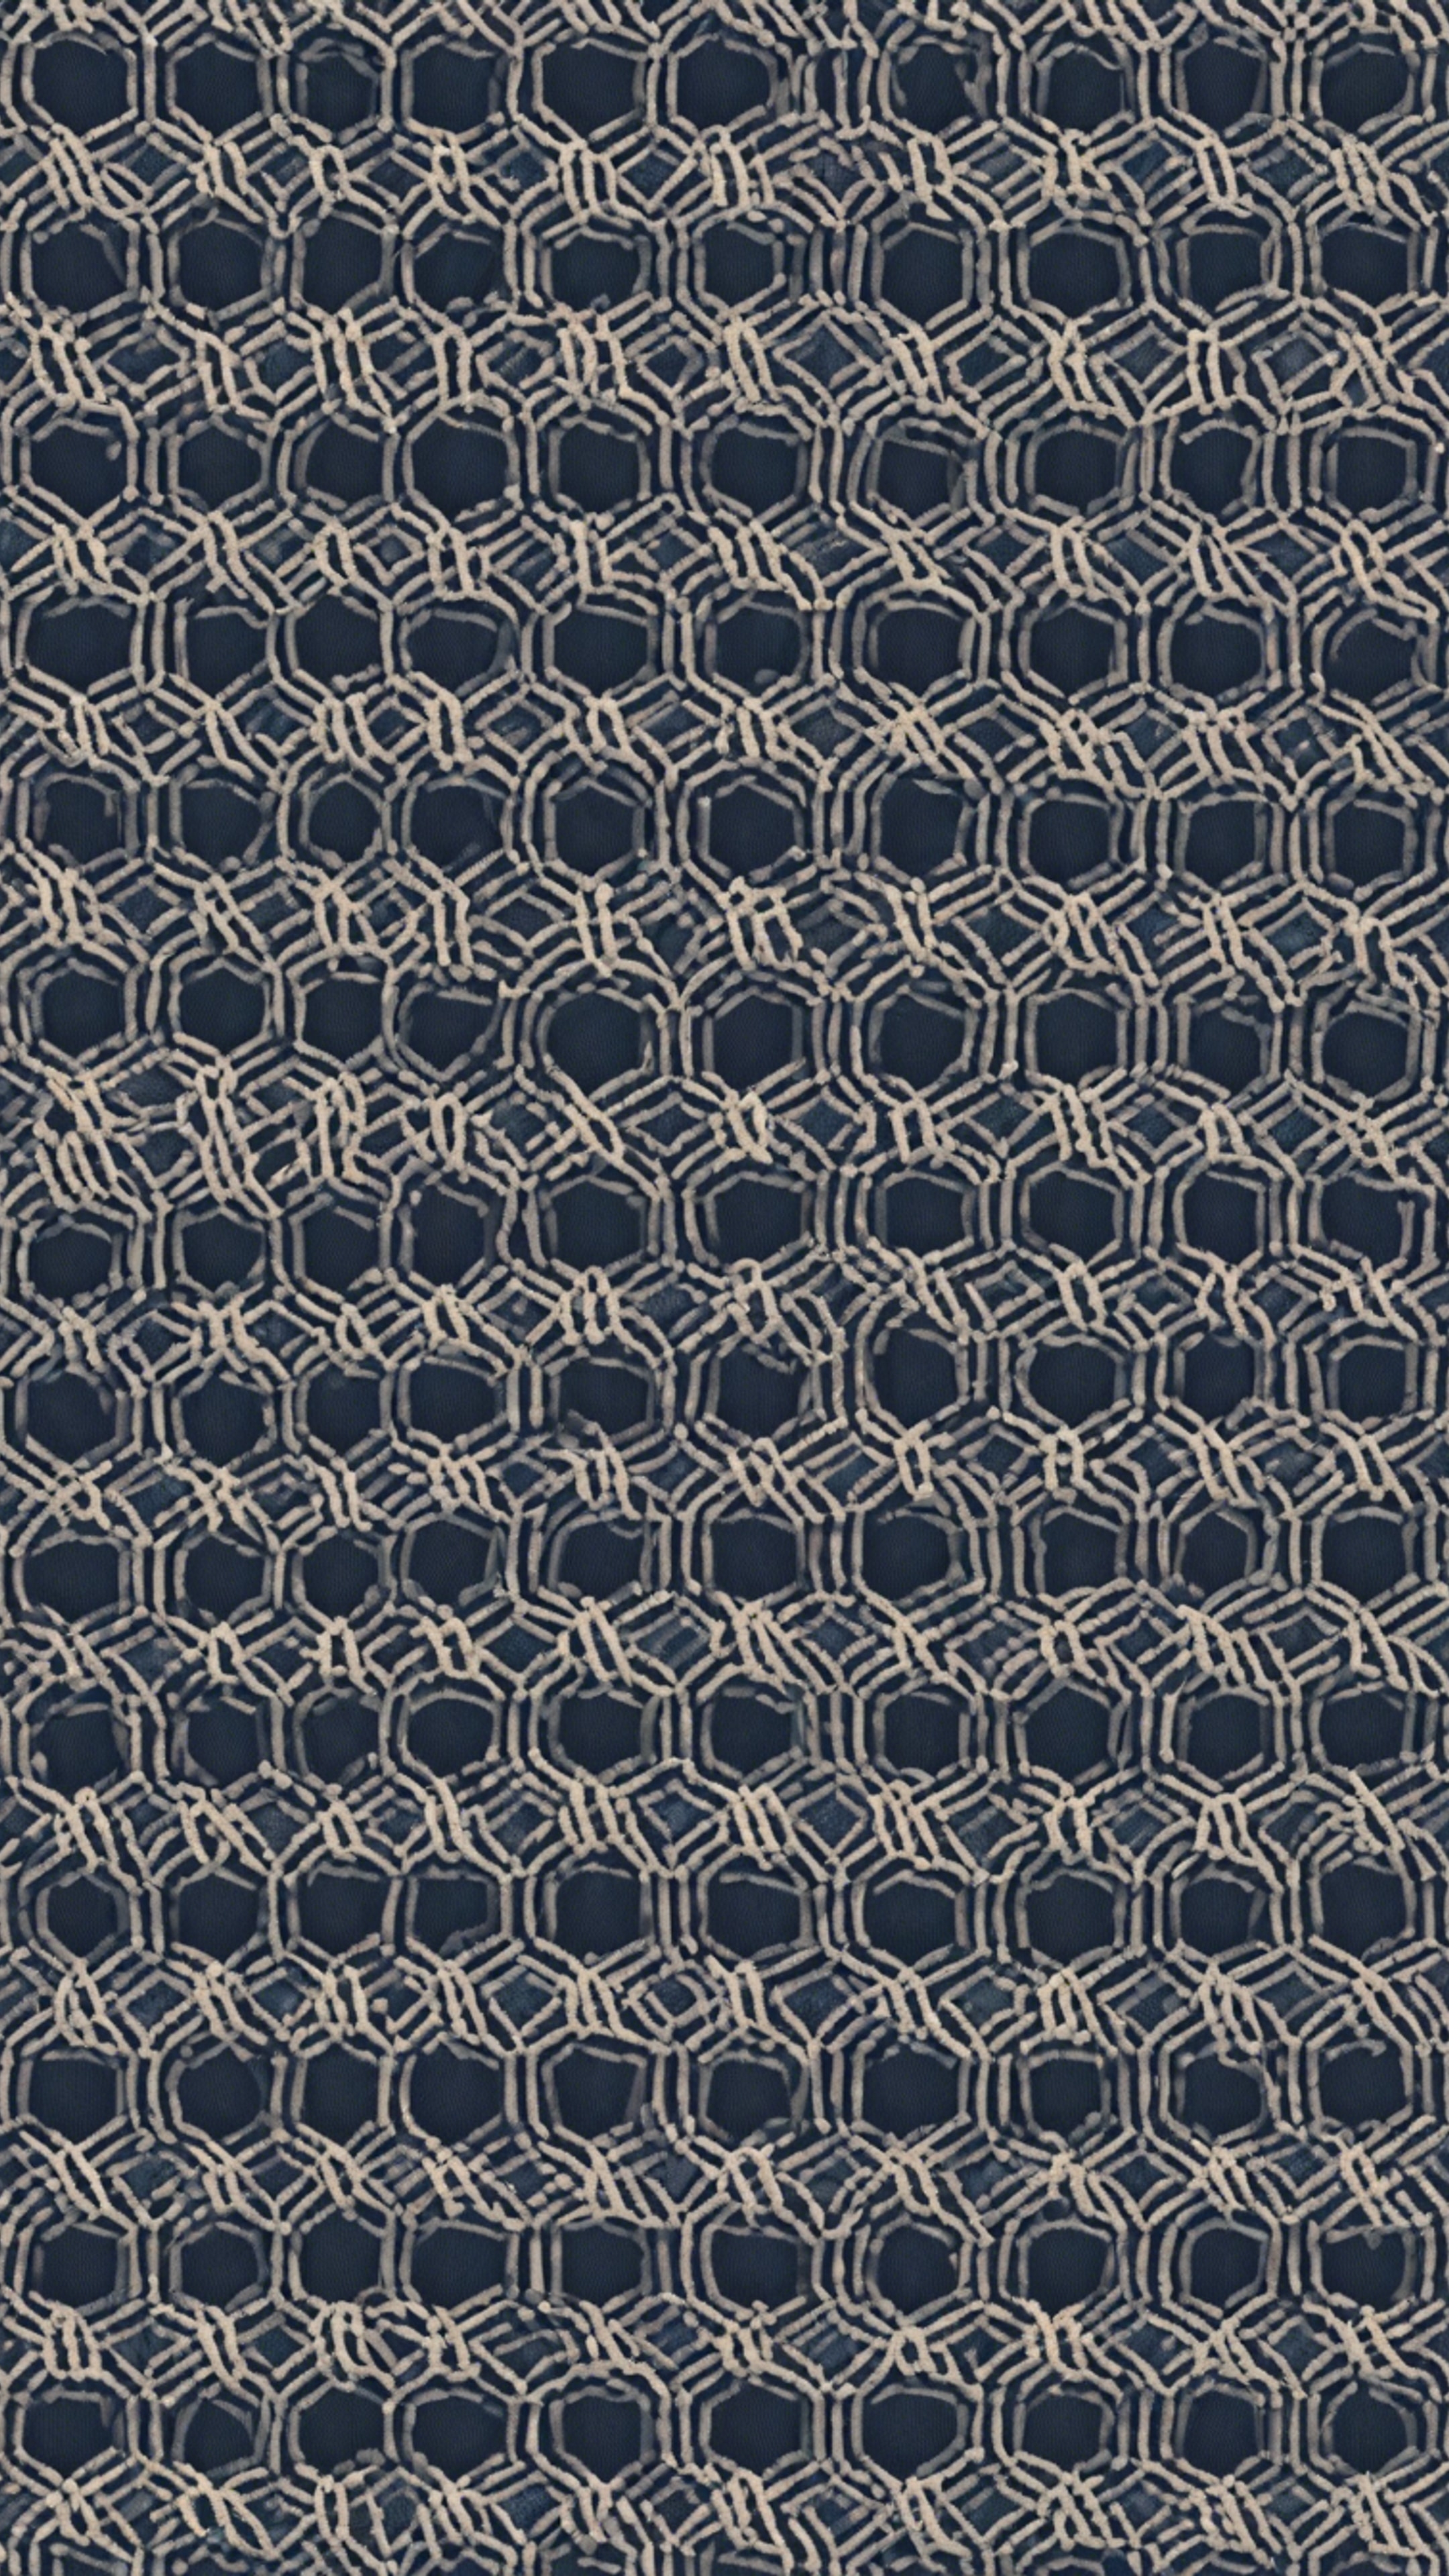 A geometric seamless pattern inspired by traditional Japanese sashiko stitching Hình nền[d49f05622a7b4579b9ed]